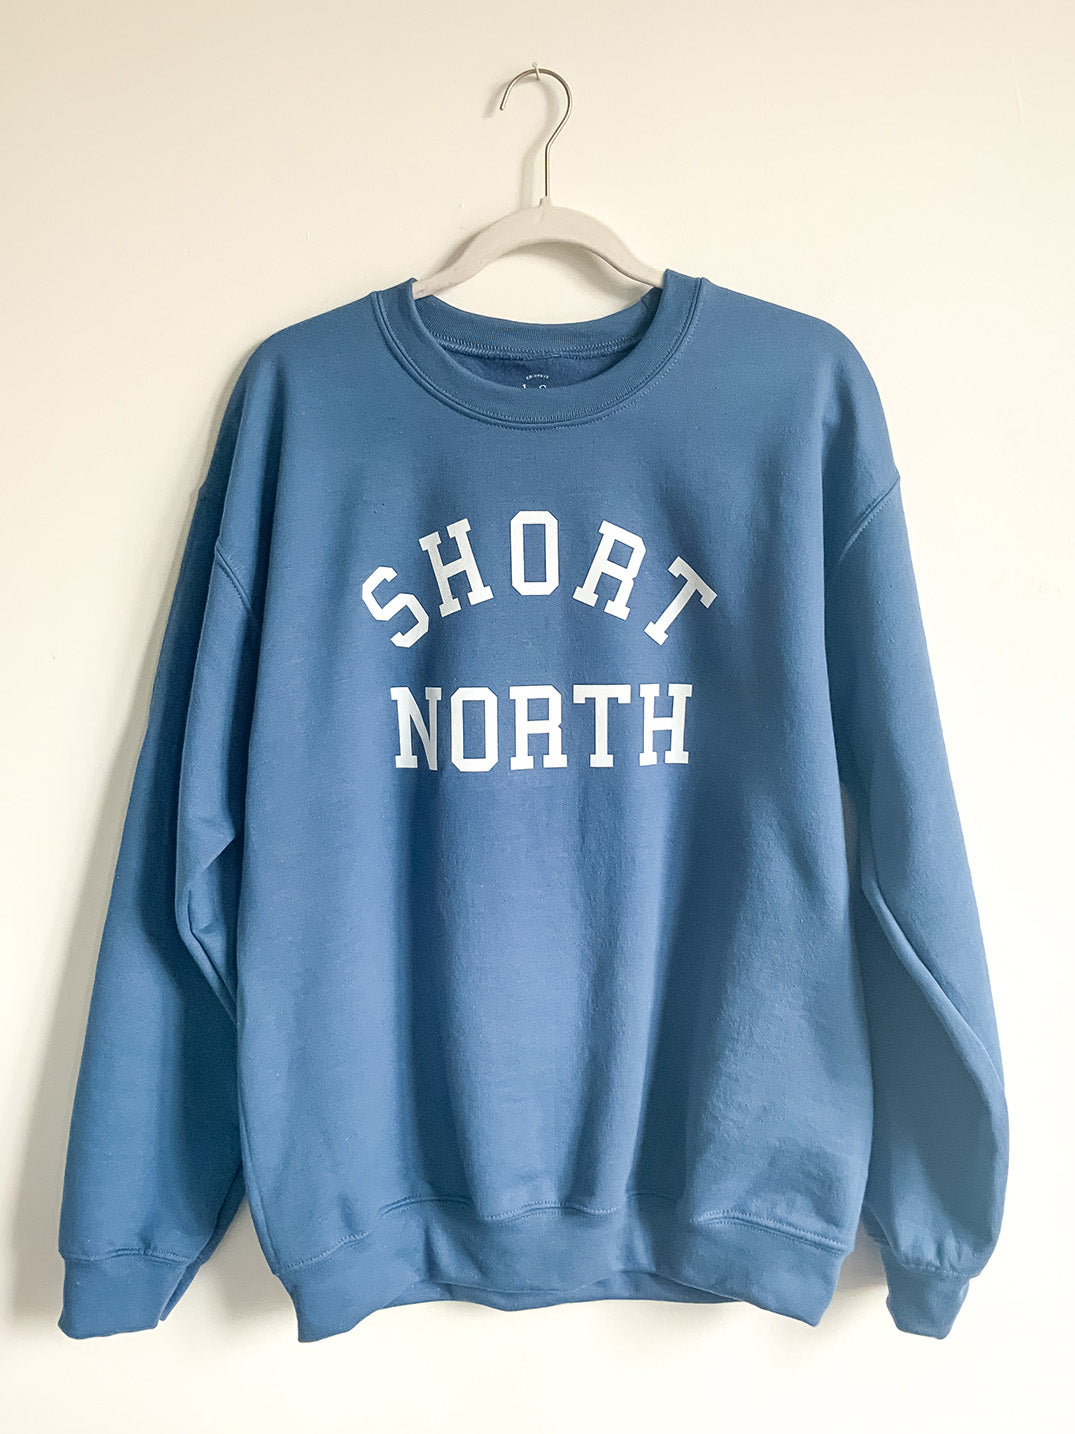 Hanging indigo blue Short North crewneck sweatshirt.